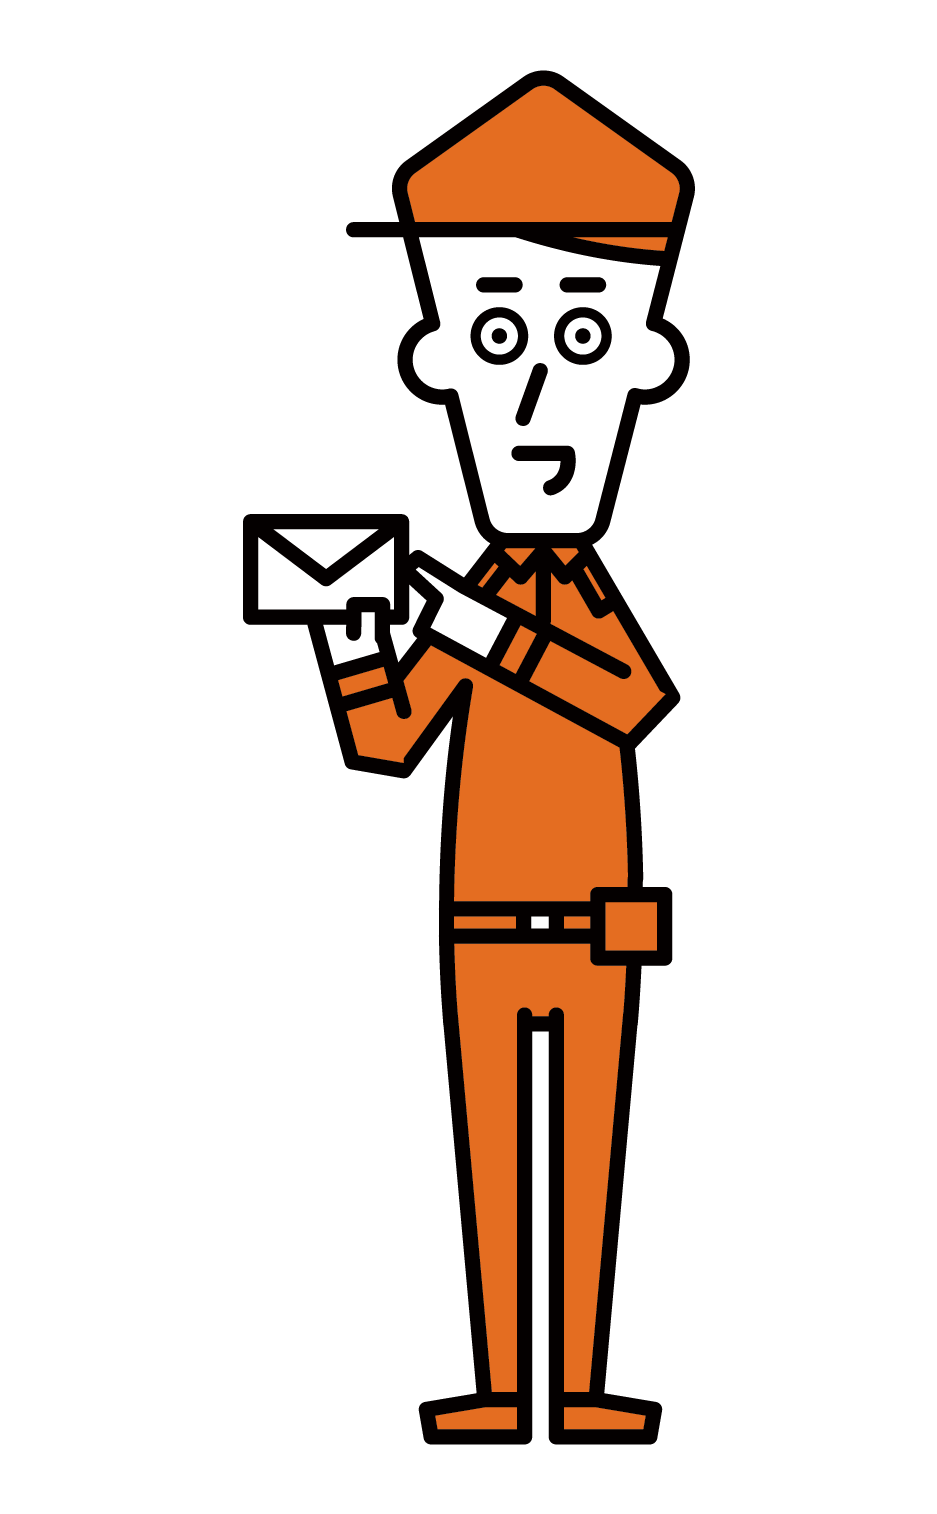 Illustration of a post man